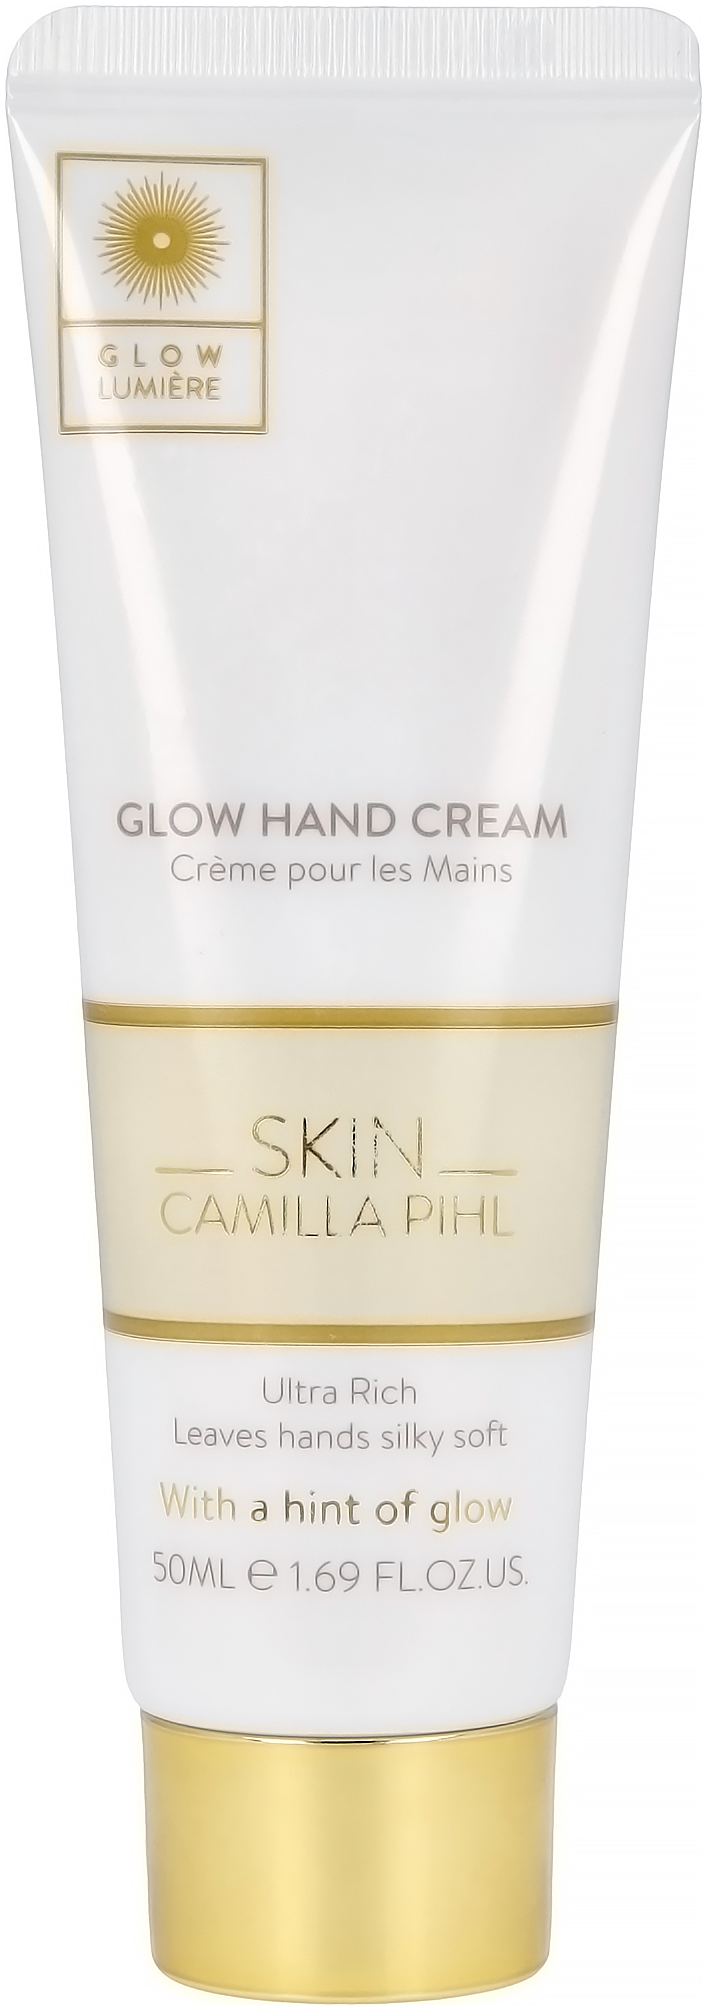 Camilla Pihl Skin Hand Cream 50 ml | lyko.com